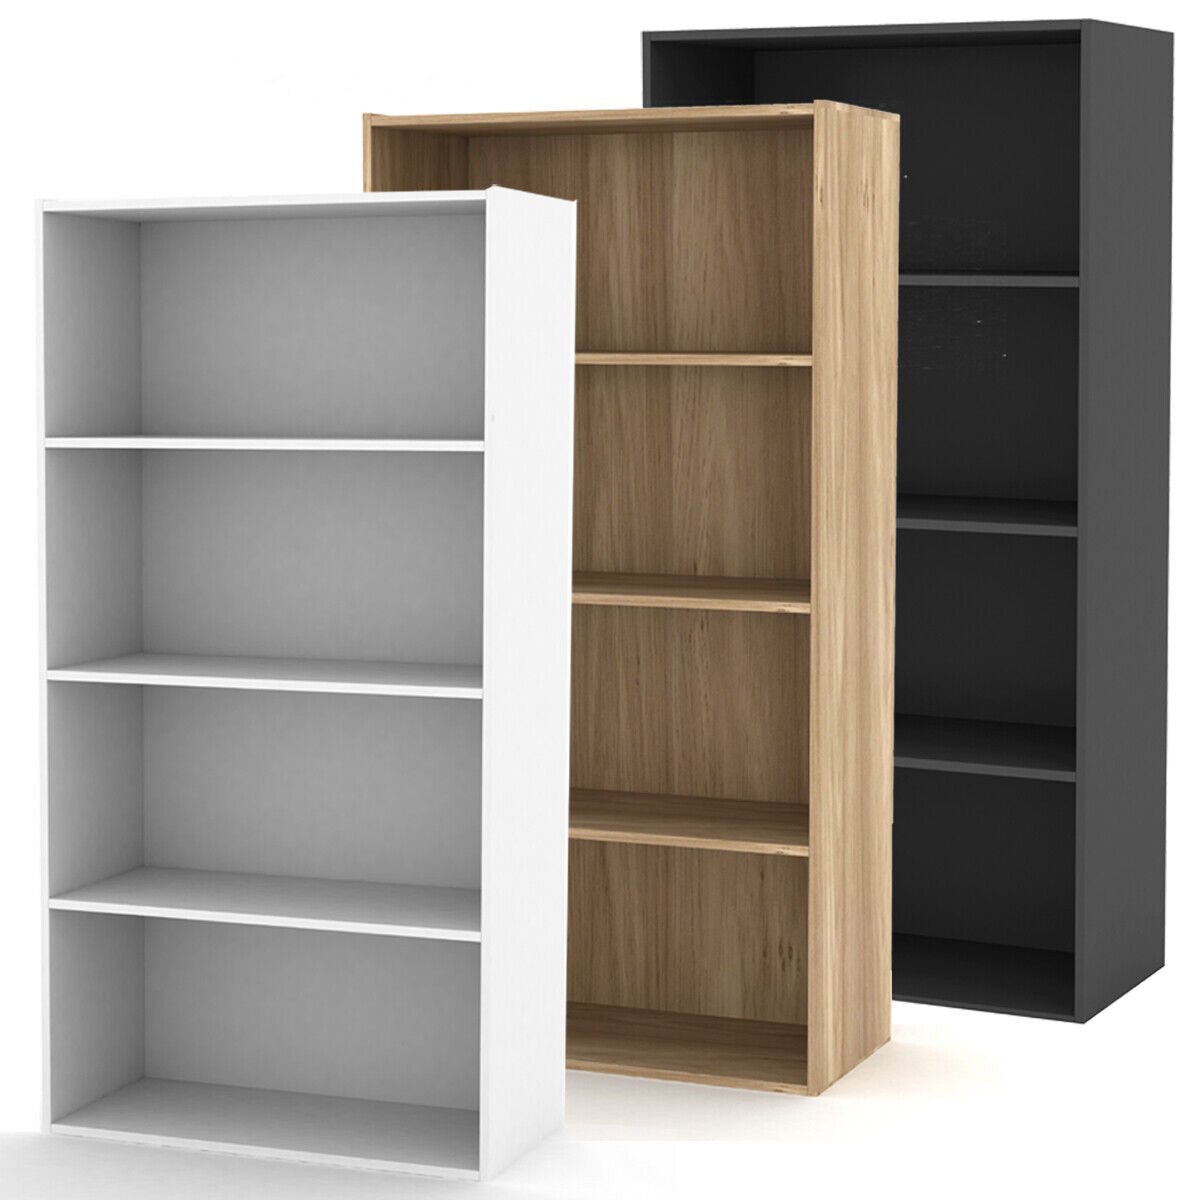 4 Tier Wide Wooden Bookcase Cupboard Storage Shelving Display Shelf Cabinet Unit